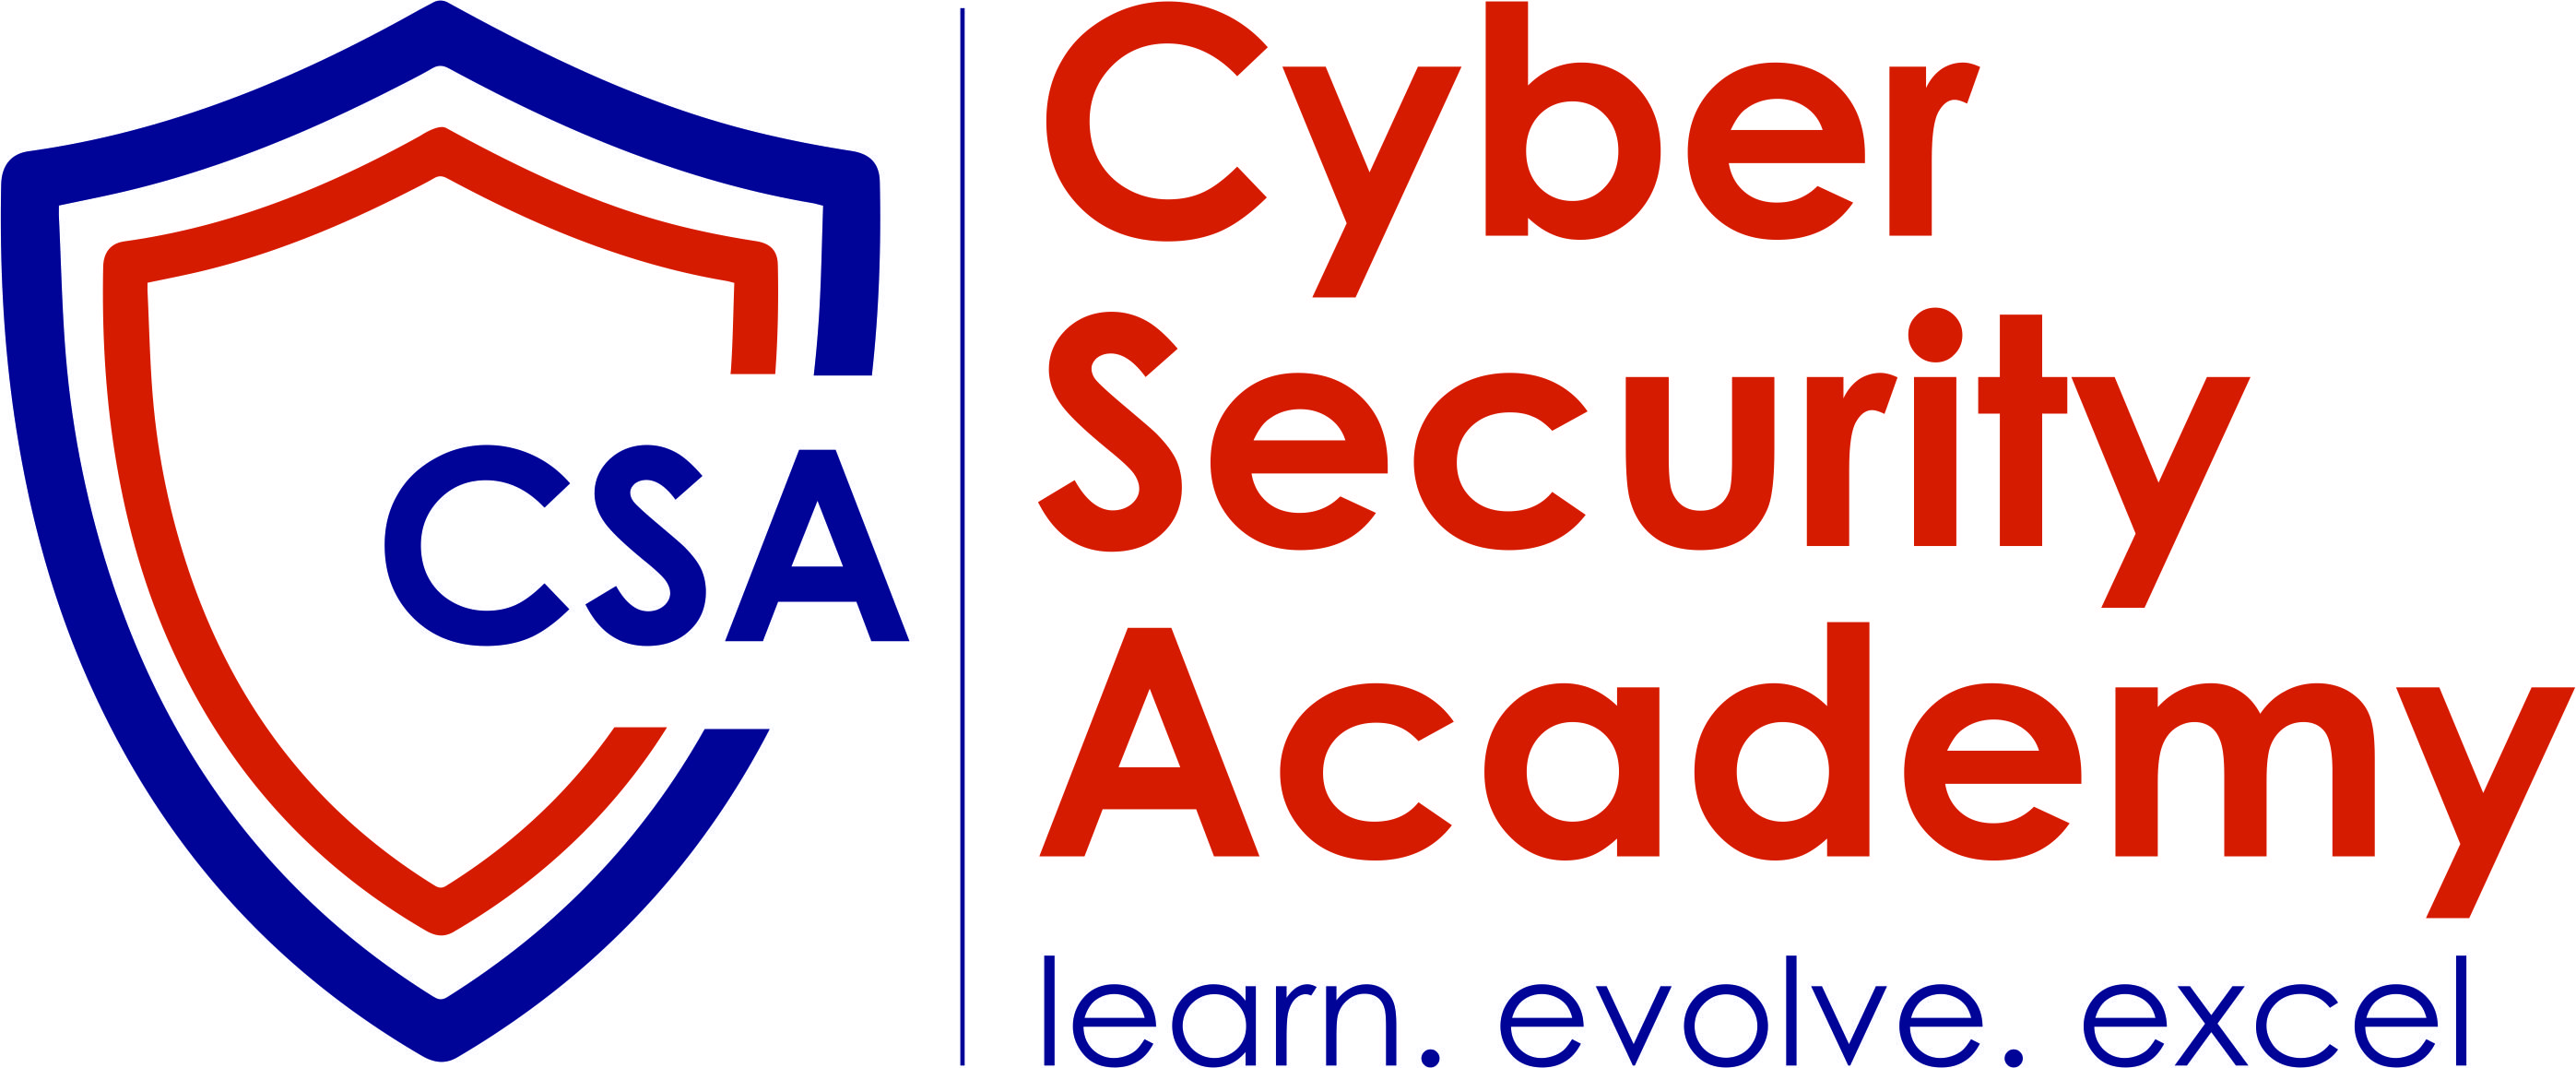 Cyber Security Academy logo